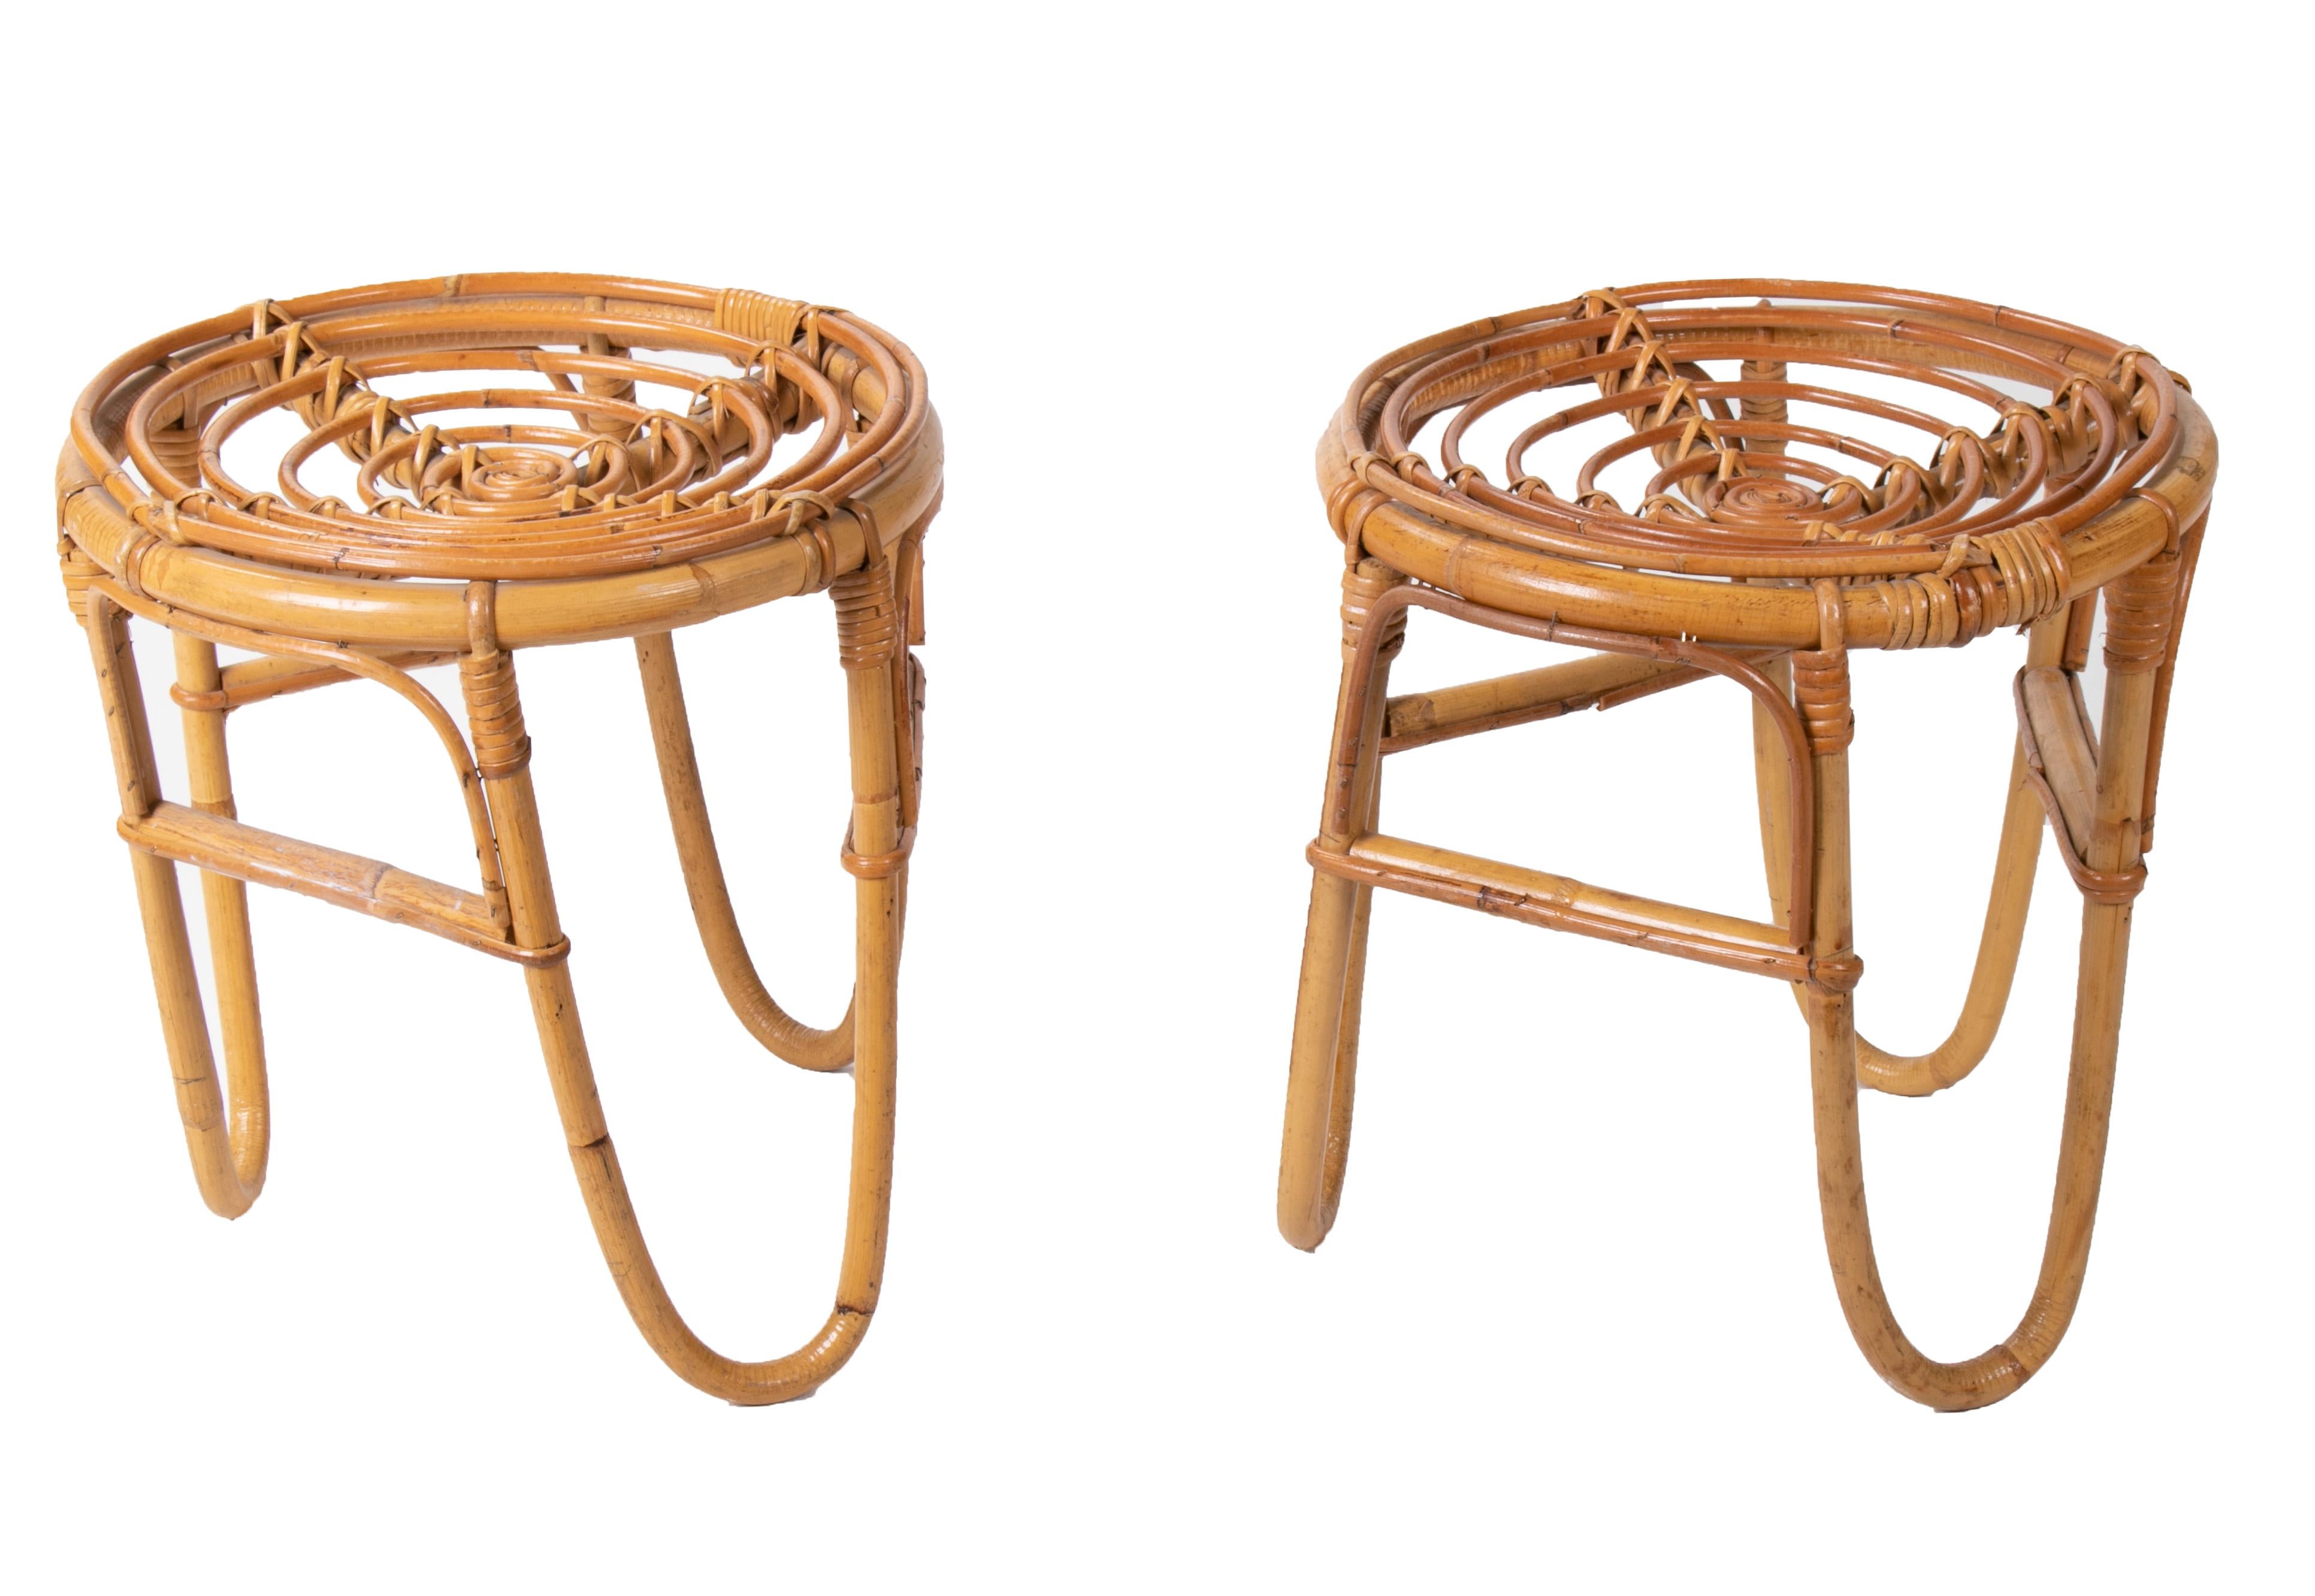 1970s Spanish handmade pair of wicker and bamboo low stools.